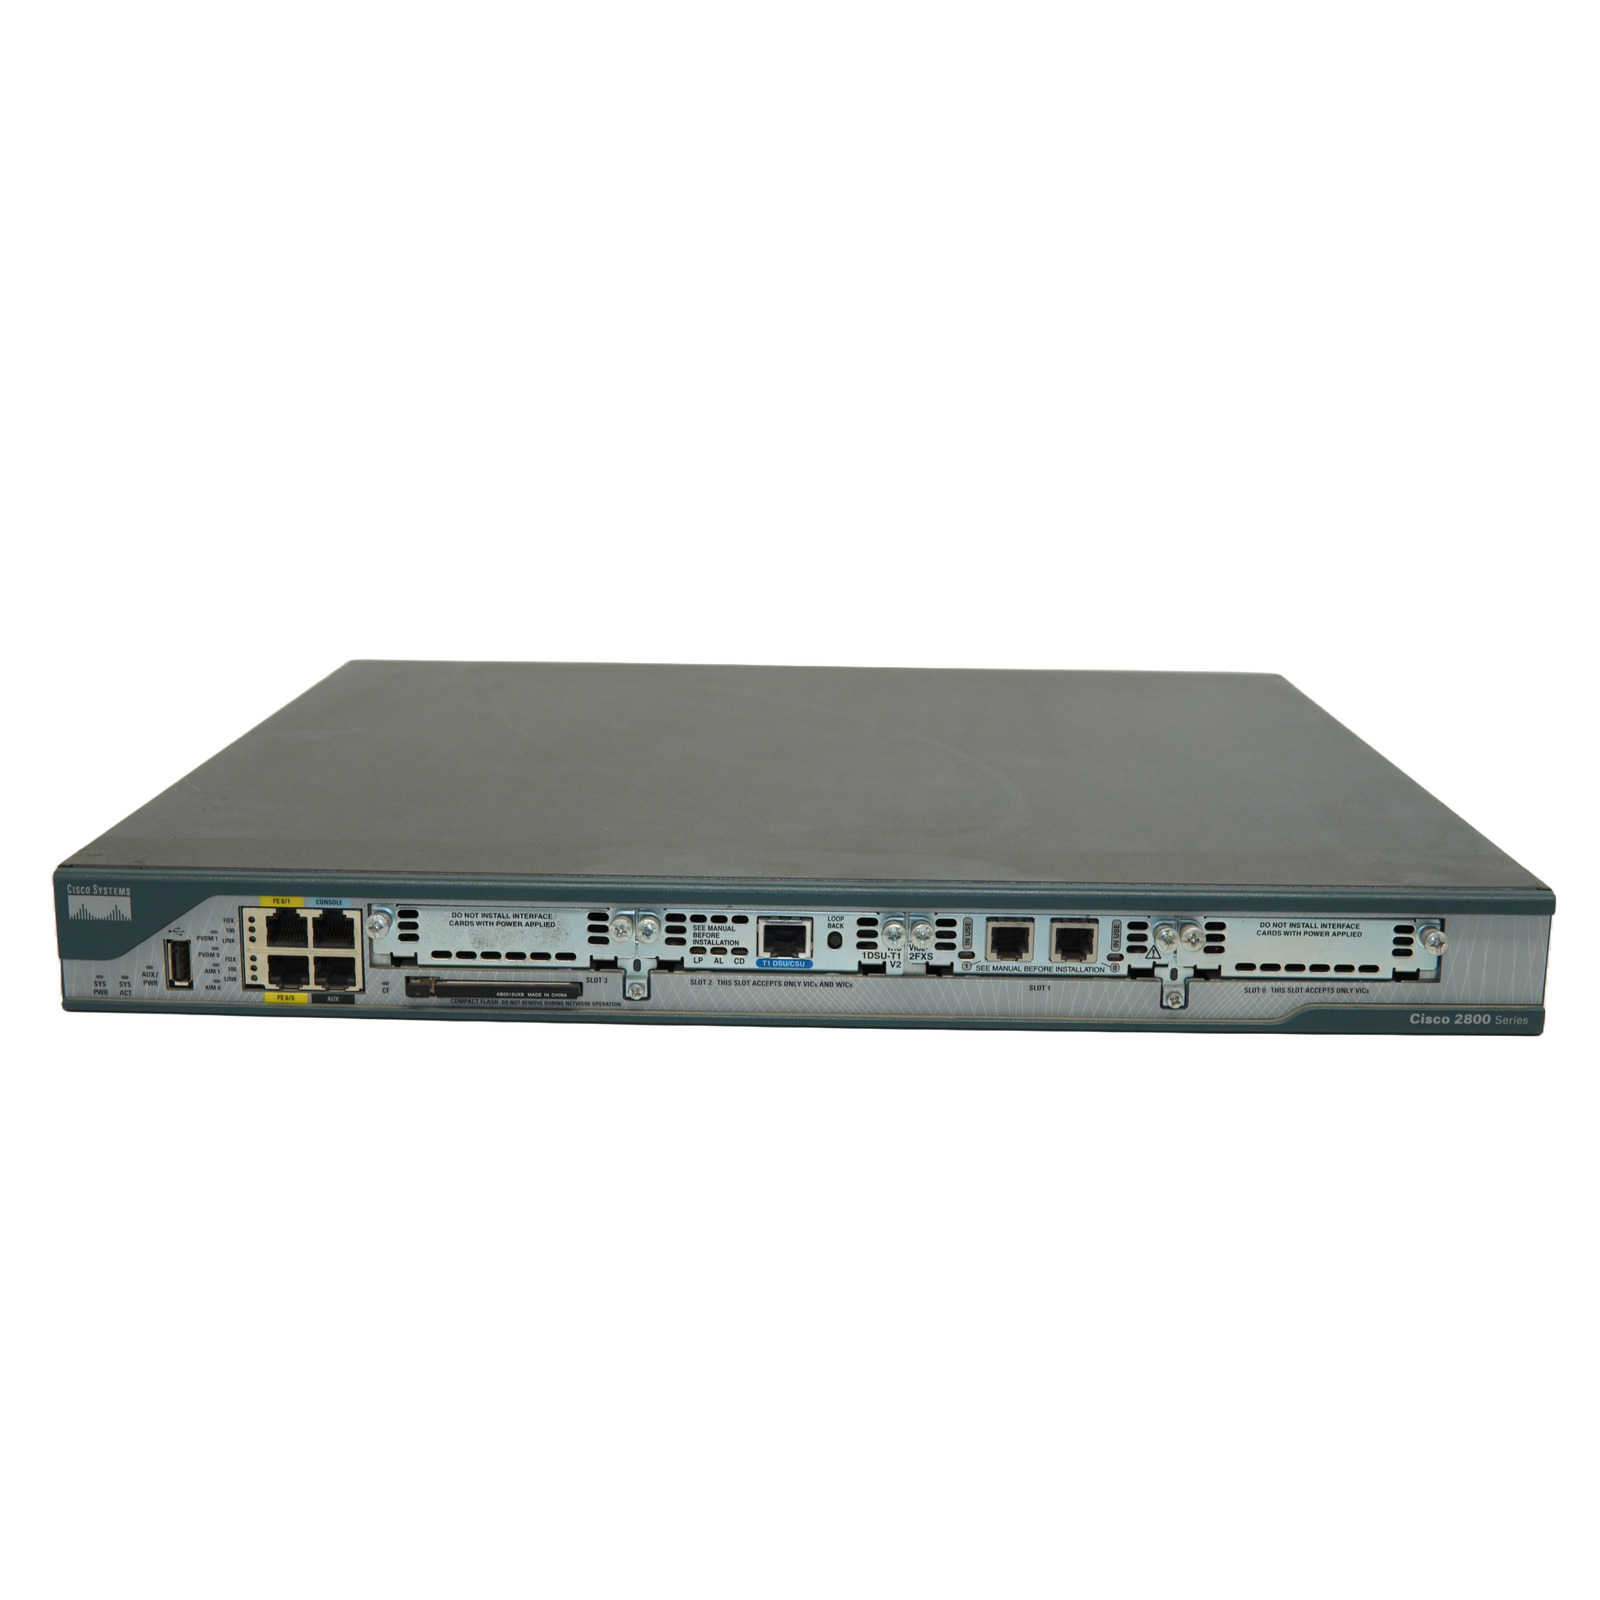 Cisco 2801 Integrated Services Router ISR w/ WIC-1DSU-1-v2, VIC2-2FXS CISCO2801